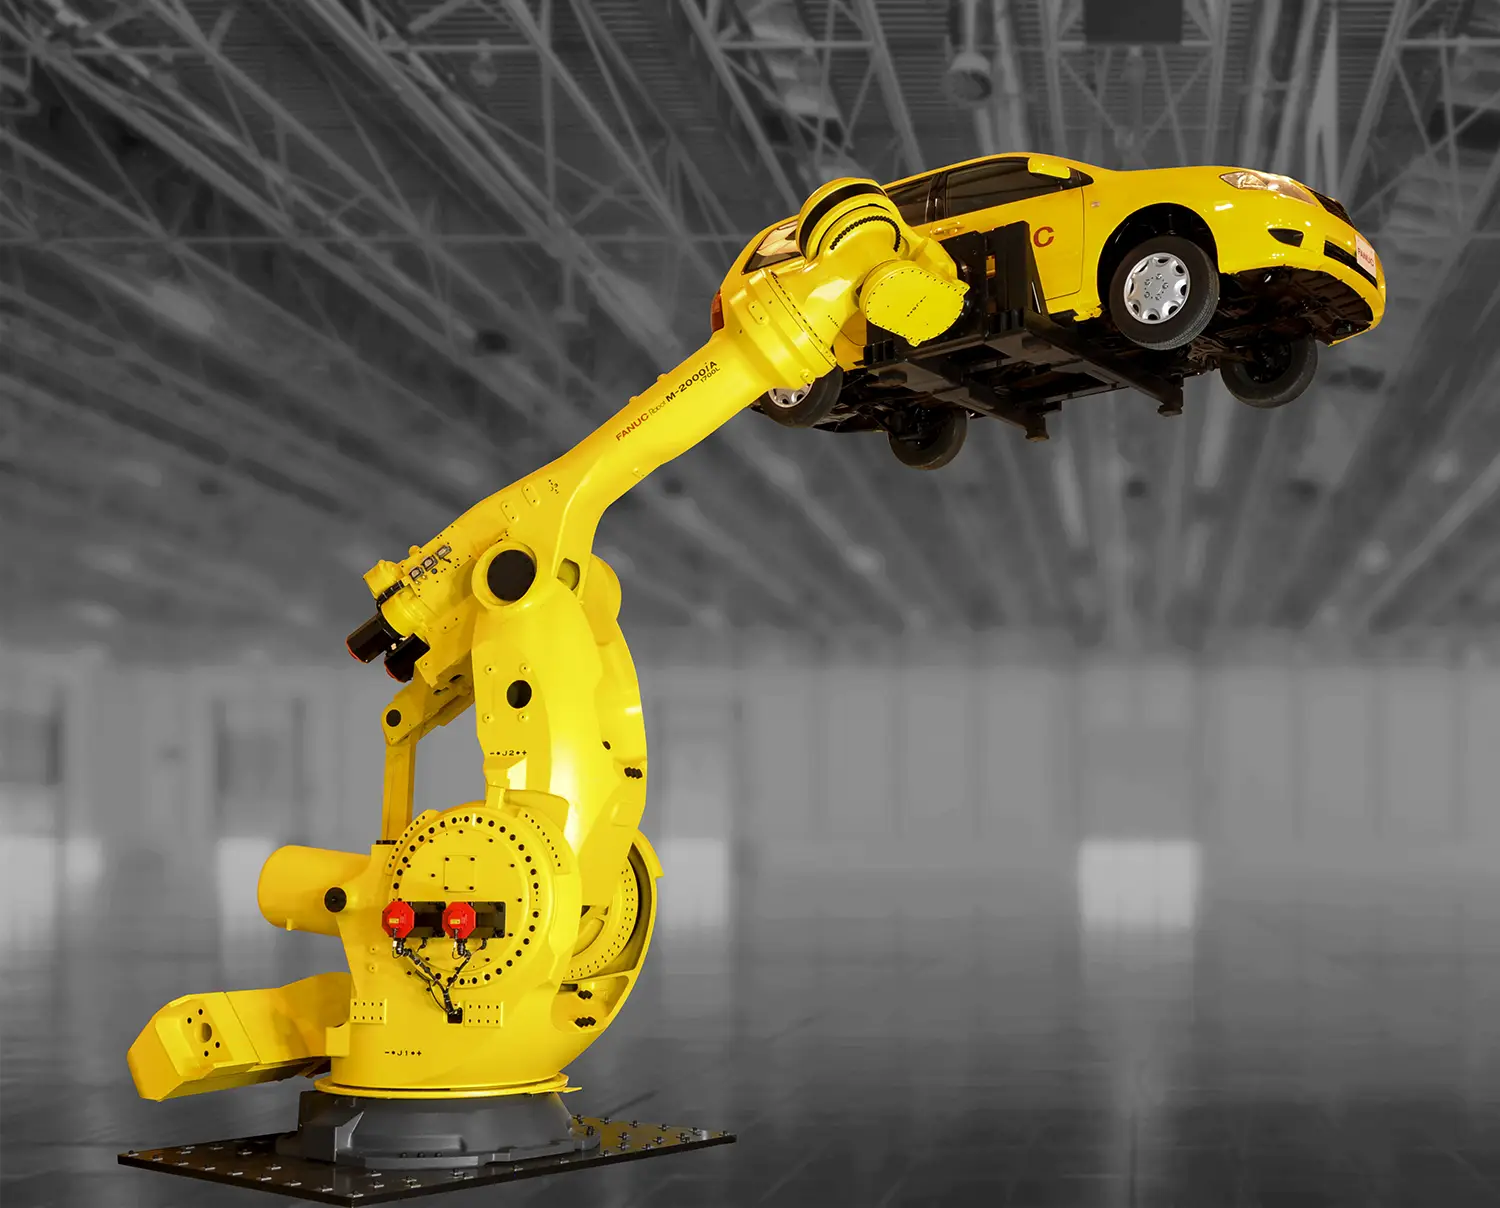 A massive yellow robotic arm lifts a car into the air.